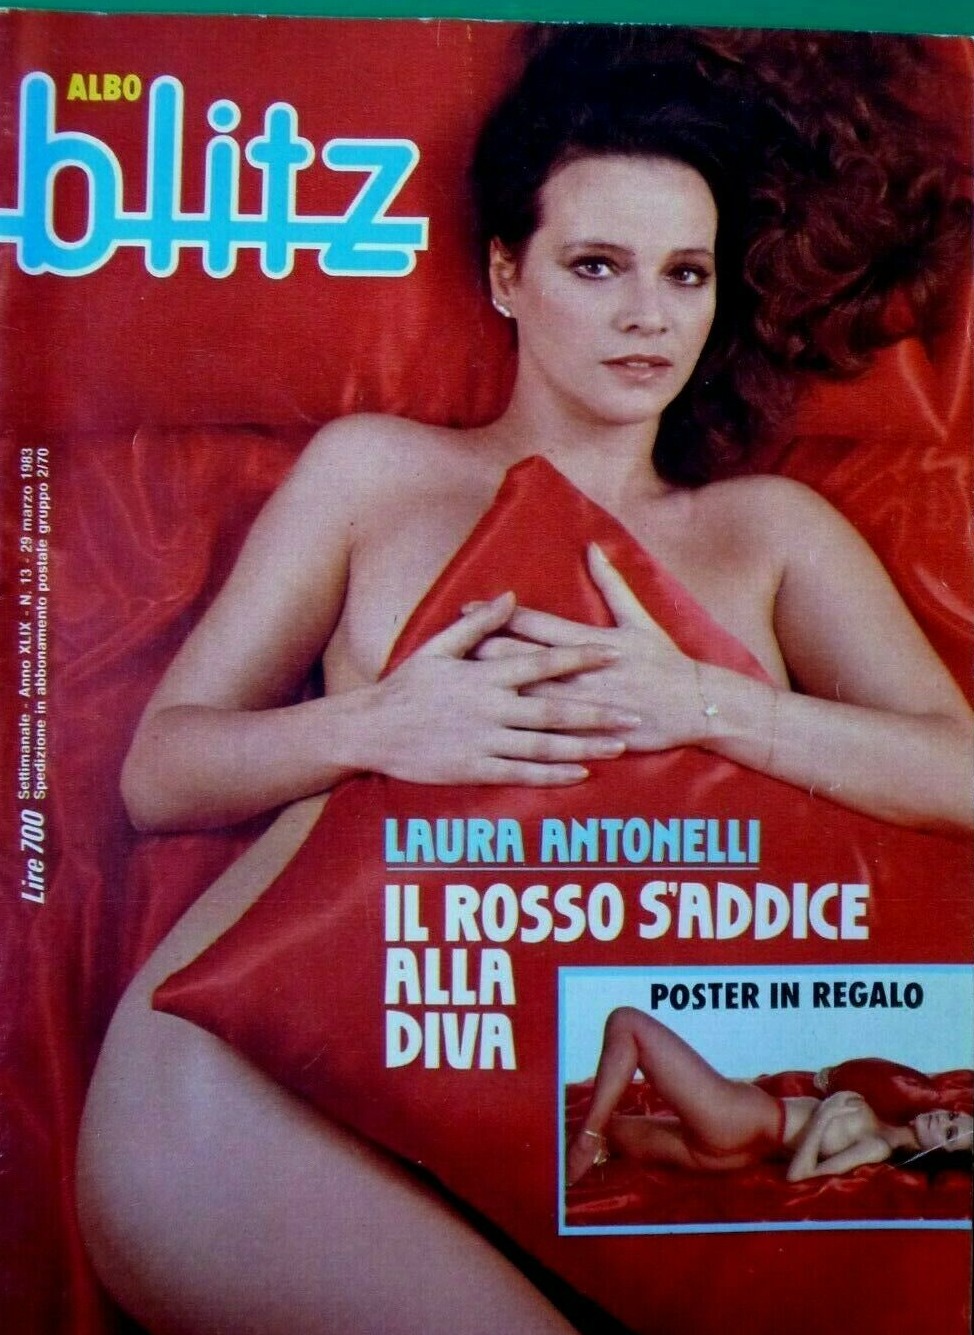 Albo Blitz # 13, March 1983 magazine back issue Albo Blitz magizine back copy Albo Blitz # 13, March 1983 Italian Adult Mens Magazine Back Issue Focused on Beautiful Female Actresses, Singers & Models. Laura Antonelli.